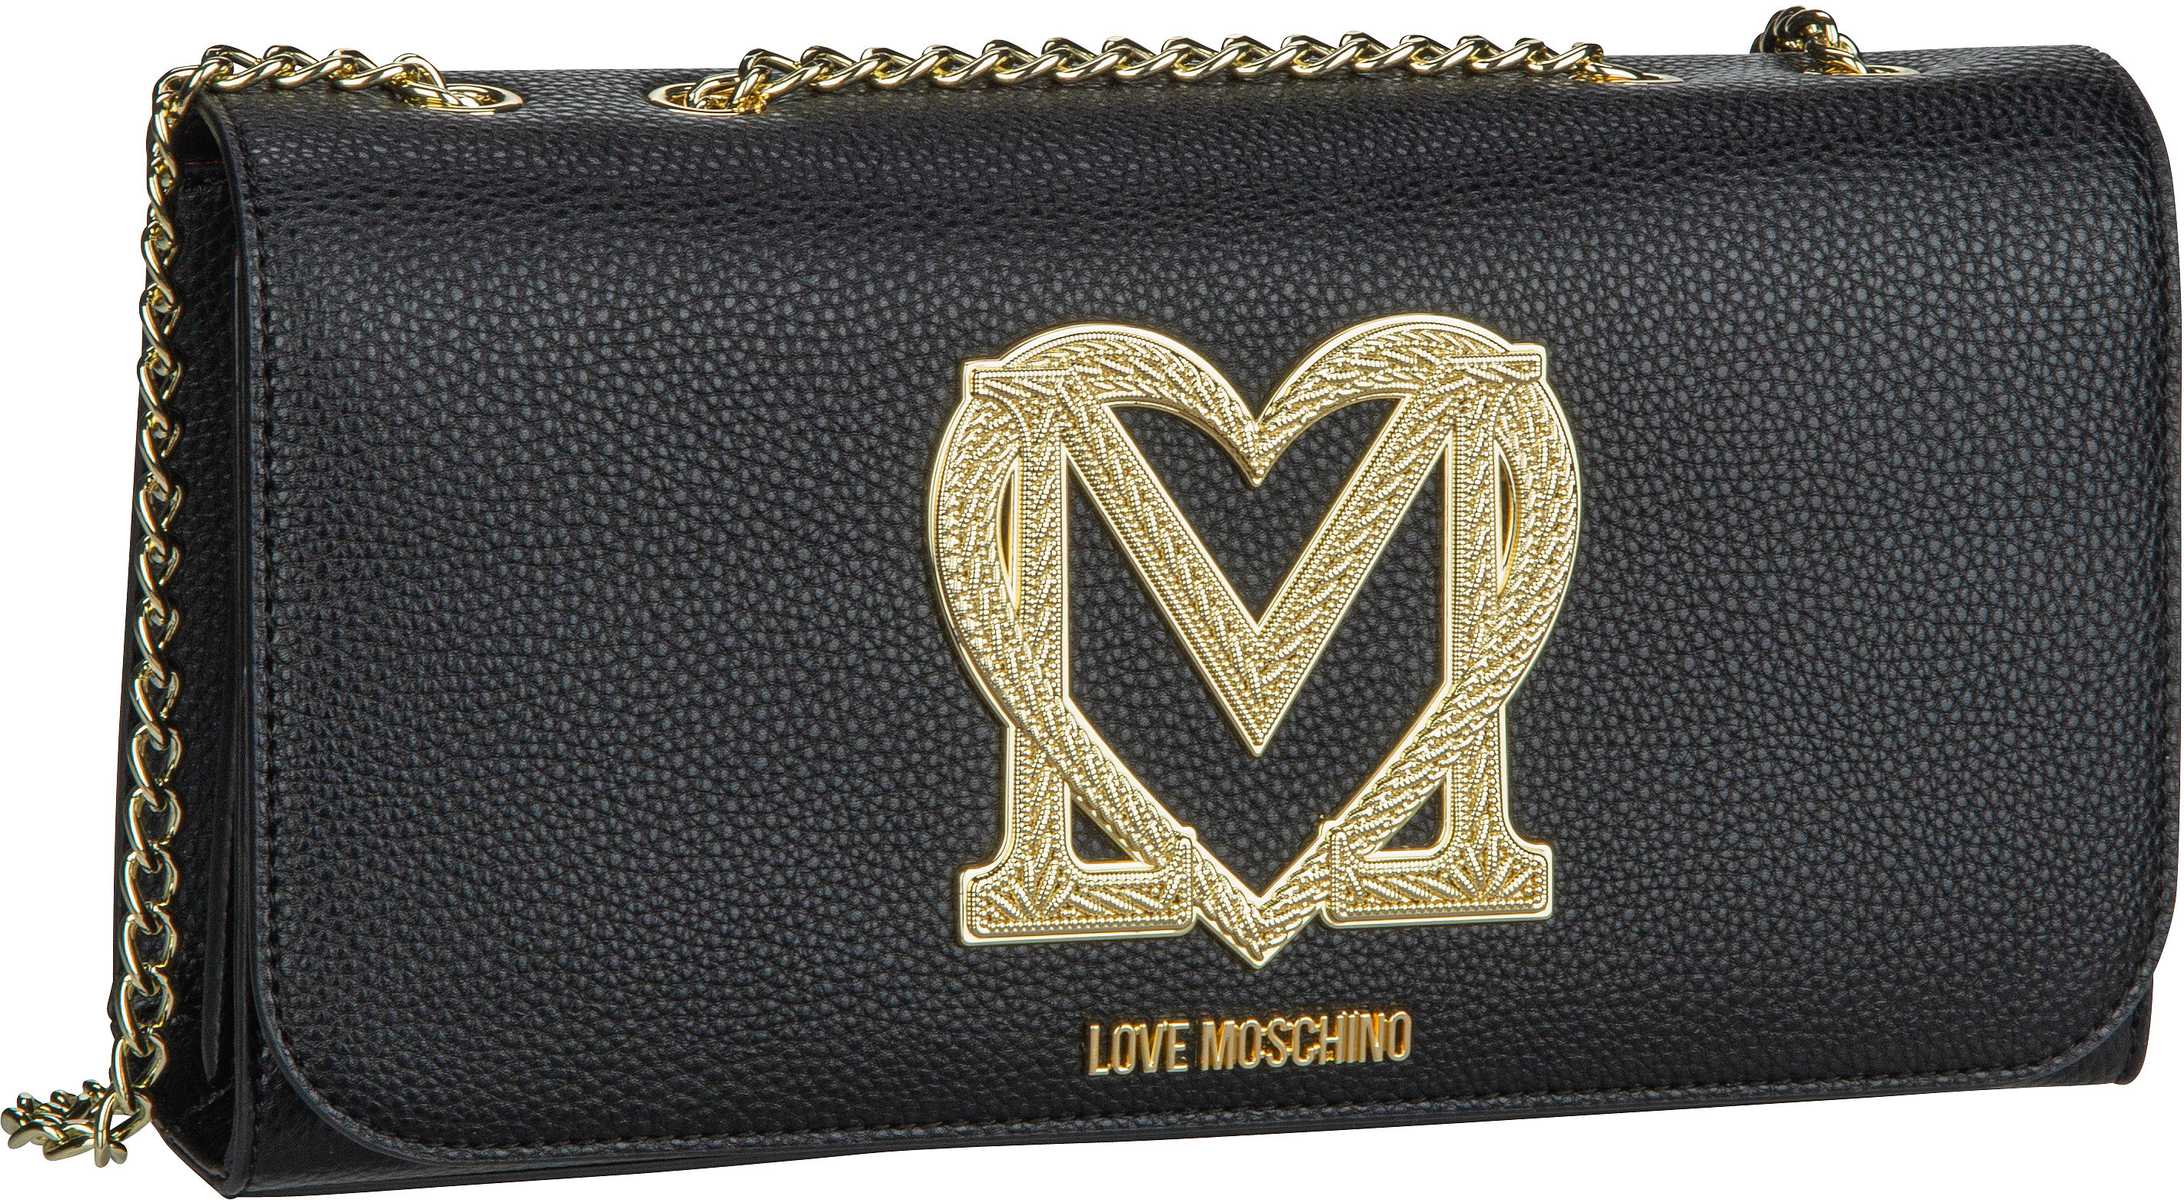 Love Moschino Embroidered Logo Bag 4379 - Black